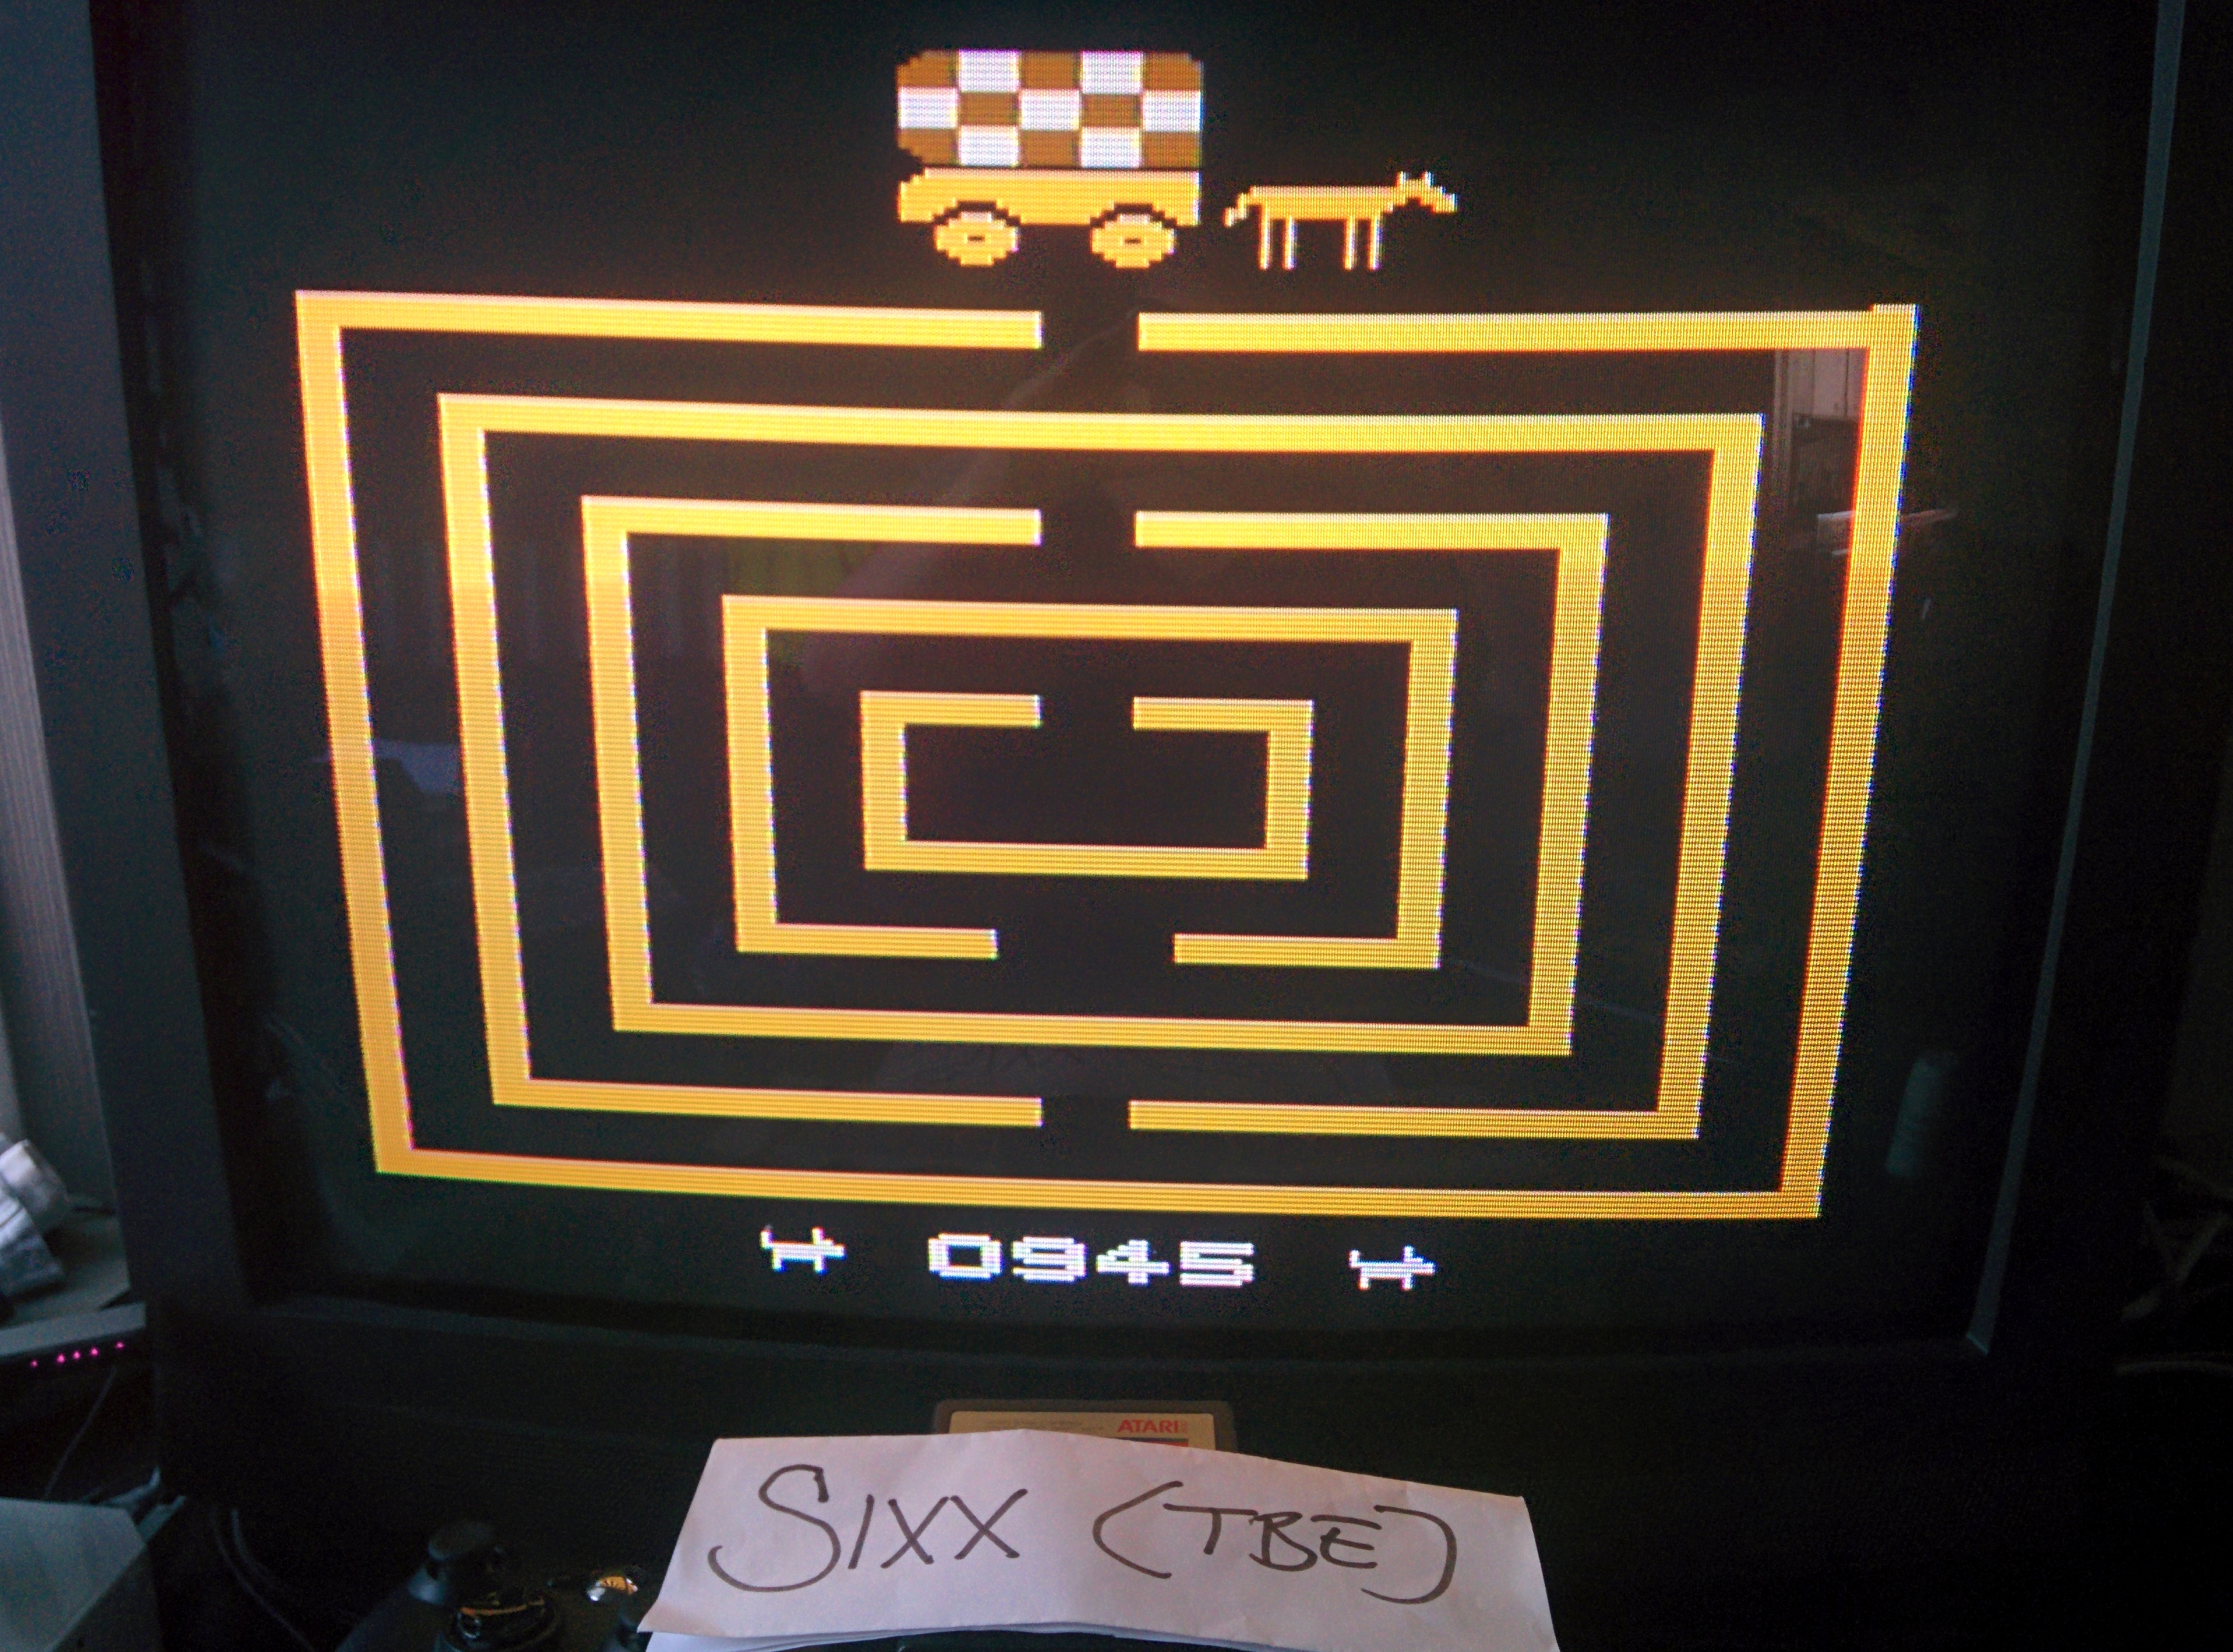 Sixx: Chase the Chuck Wagon (Atari 2600 Emulated Novice/B Mode) 945 points on 2014-07-28 13:01:39